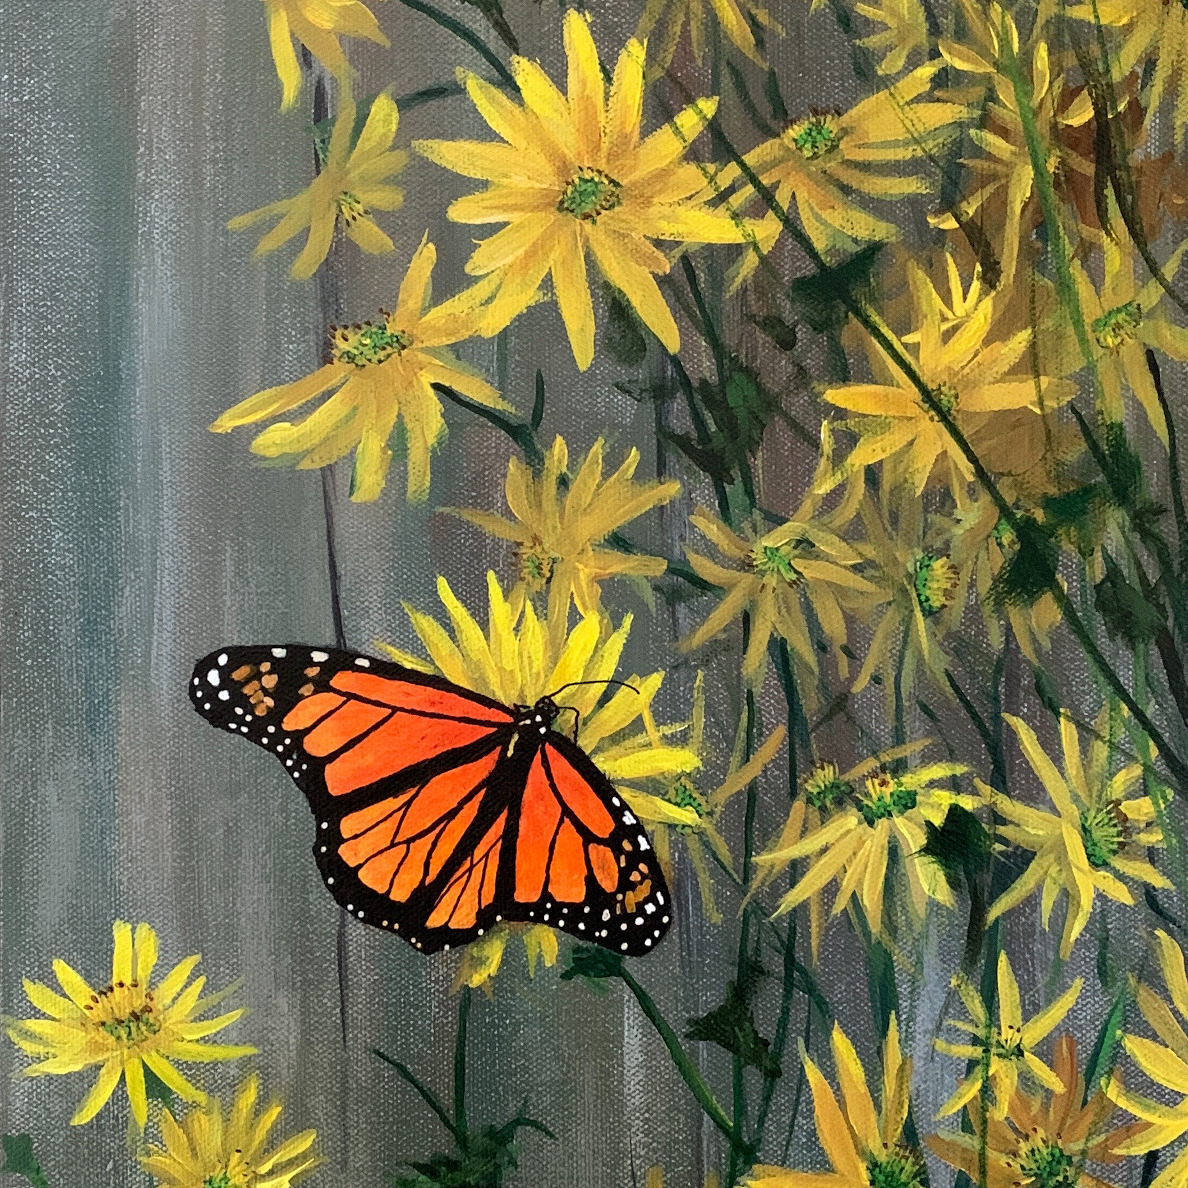 Detail of Butterfly by Nancy M. Patrick